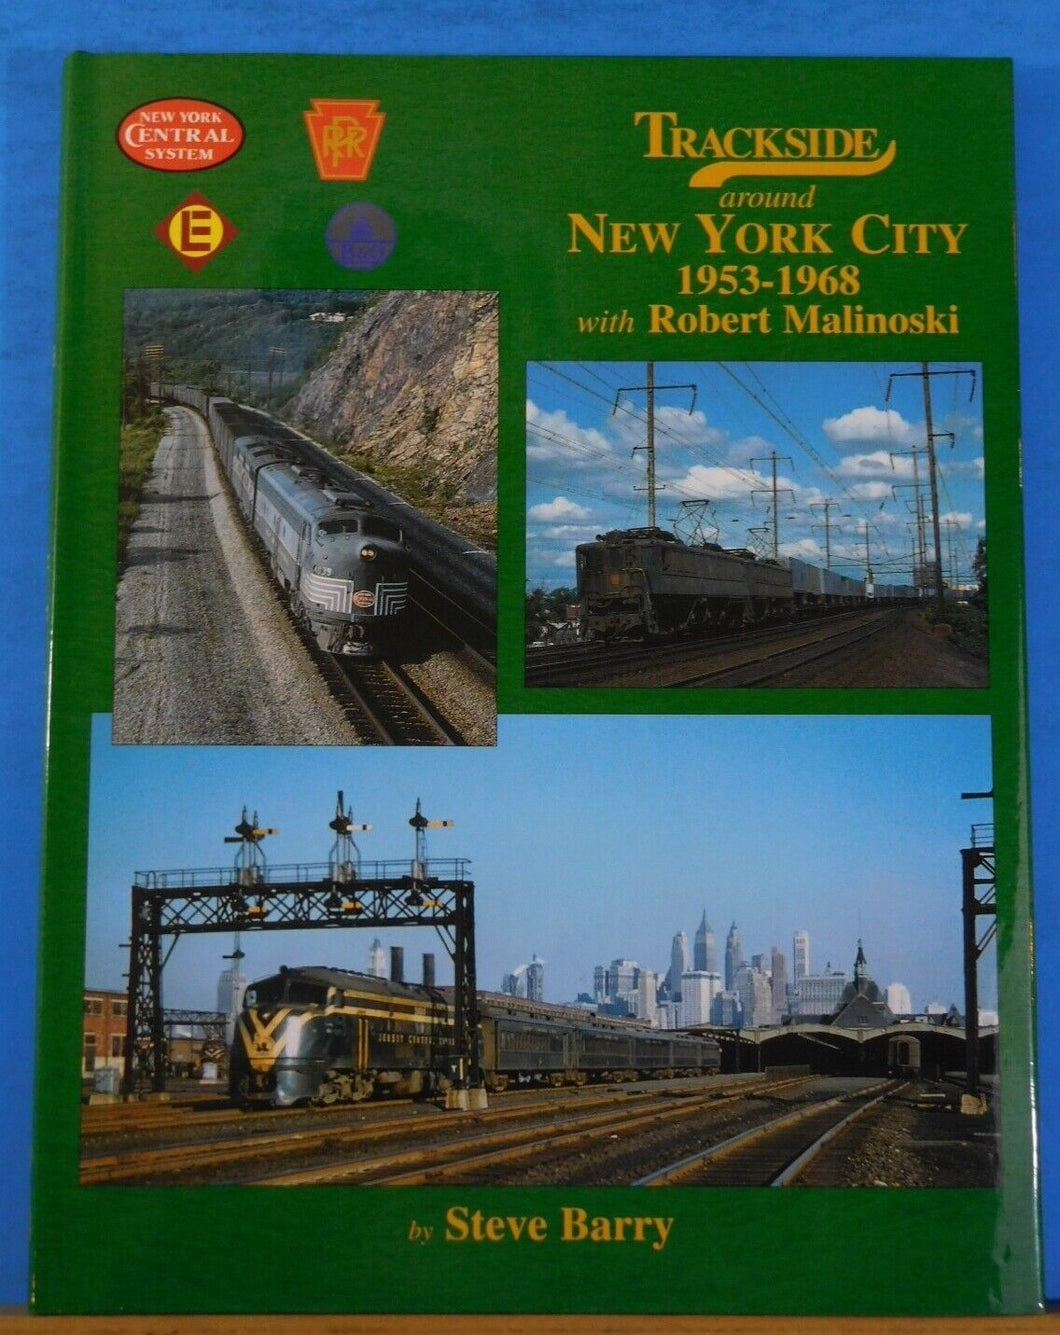 Trackside around New York City 1953-1968 with Robert Malinoski by Steve Barry